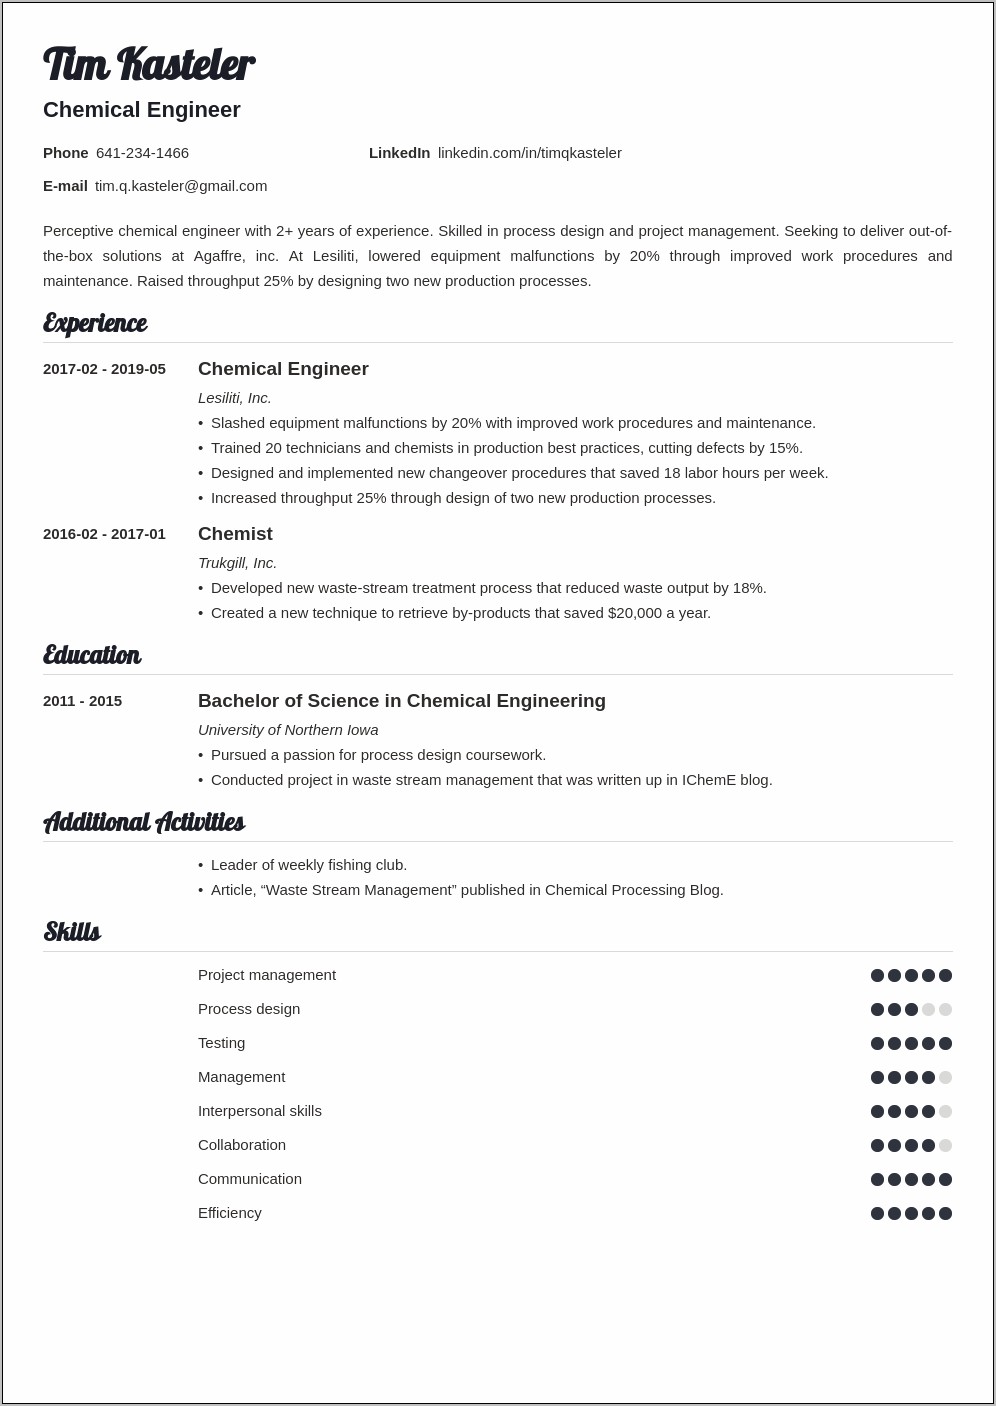 Chemical Engineer Job Description Resume